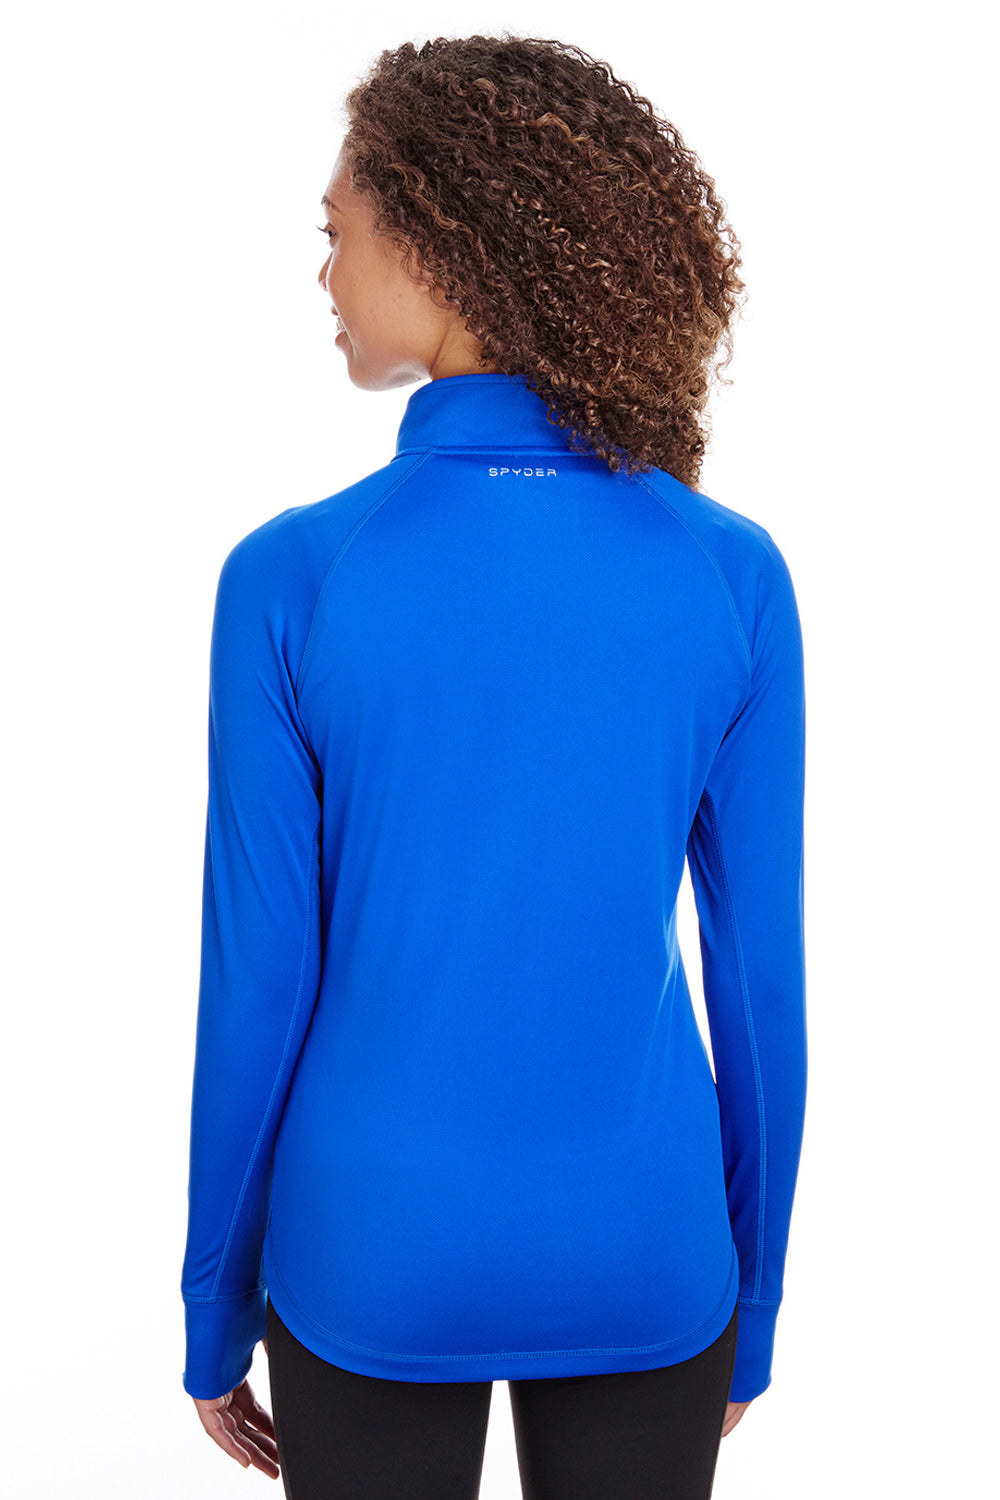 Spyder S16798 Womens Freestyle 1/4 Zip Sweatshirt Royal Blue Back